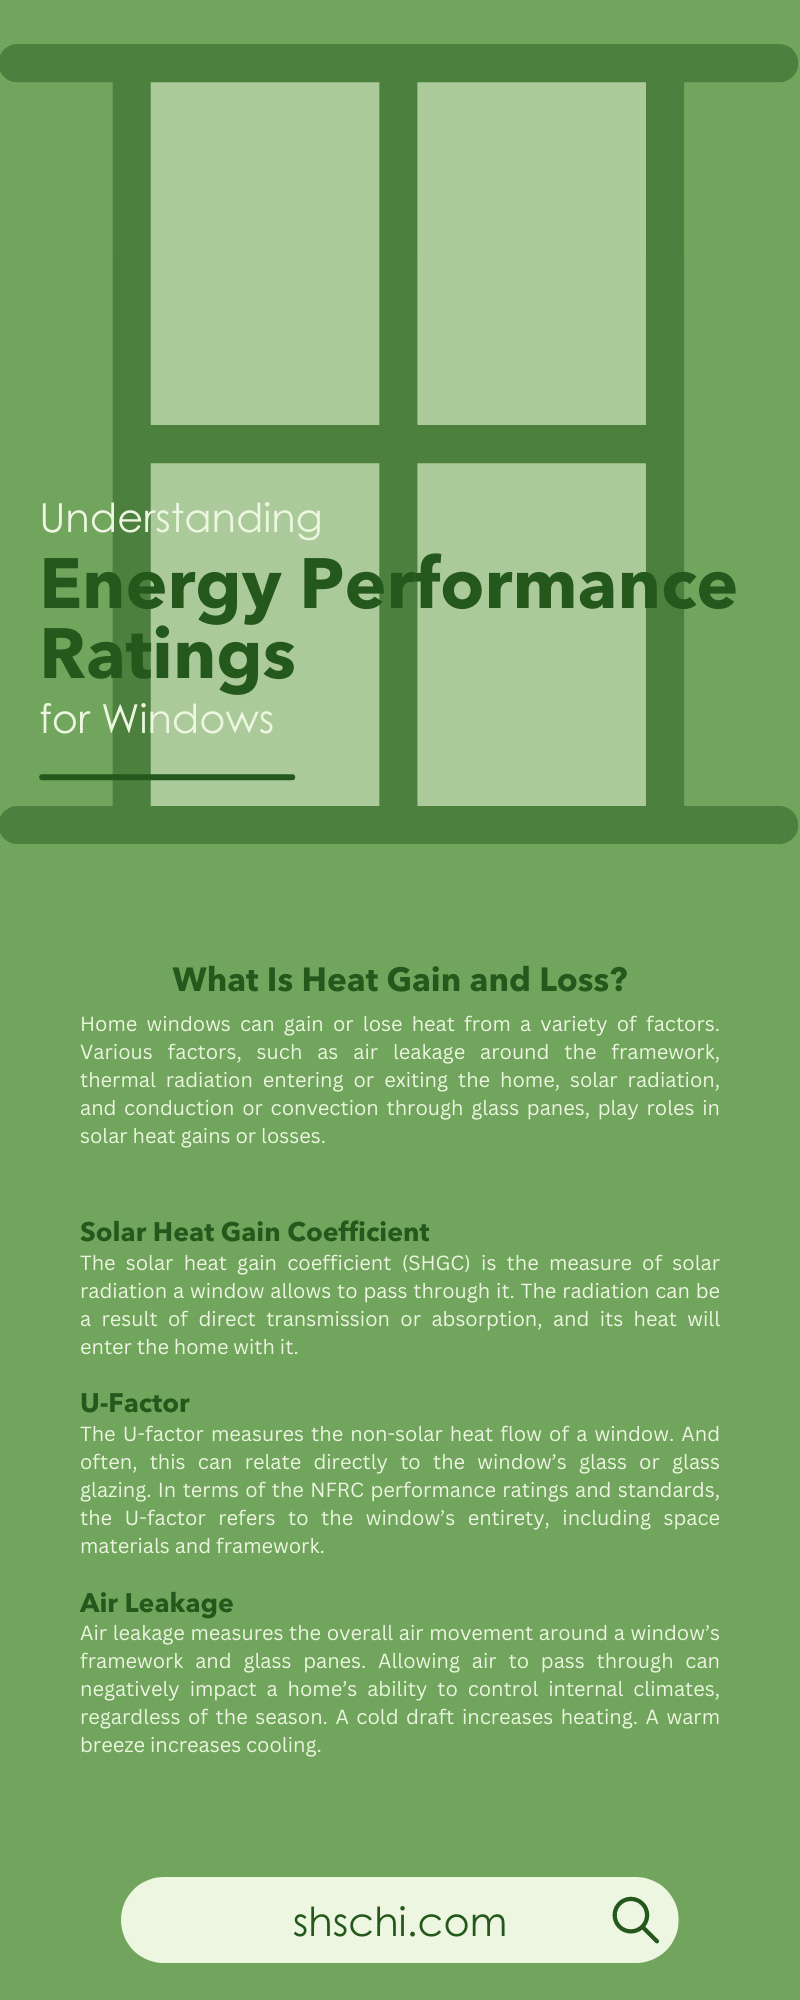 Understanding Energy Performance Ratings for Windows